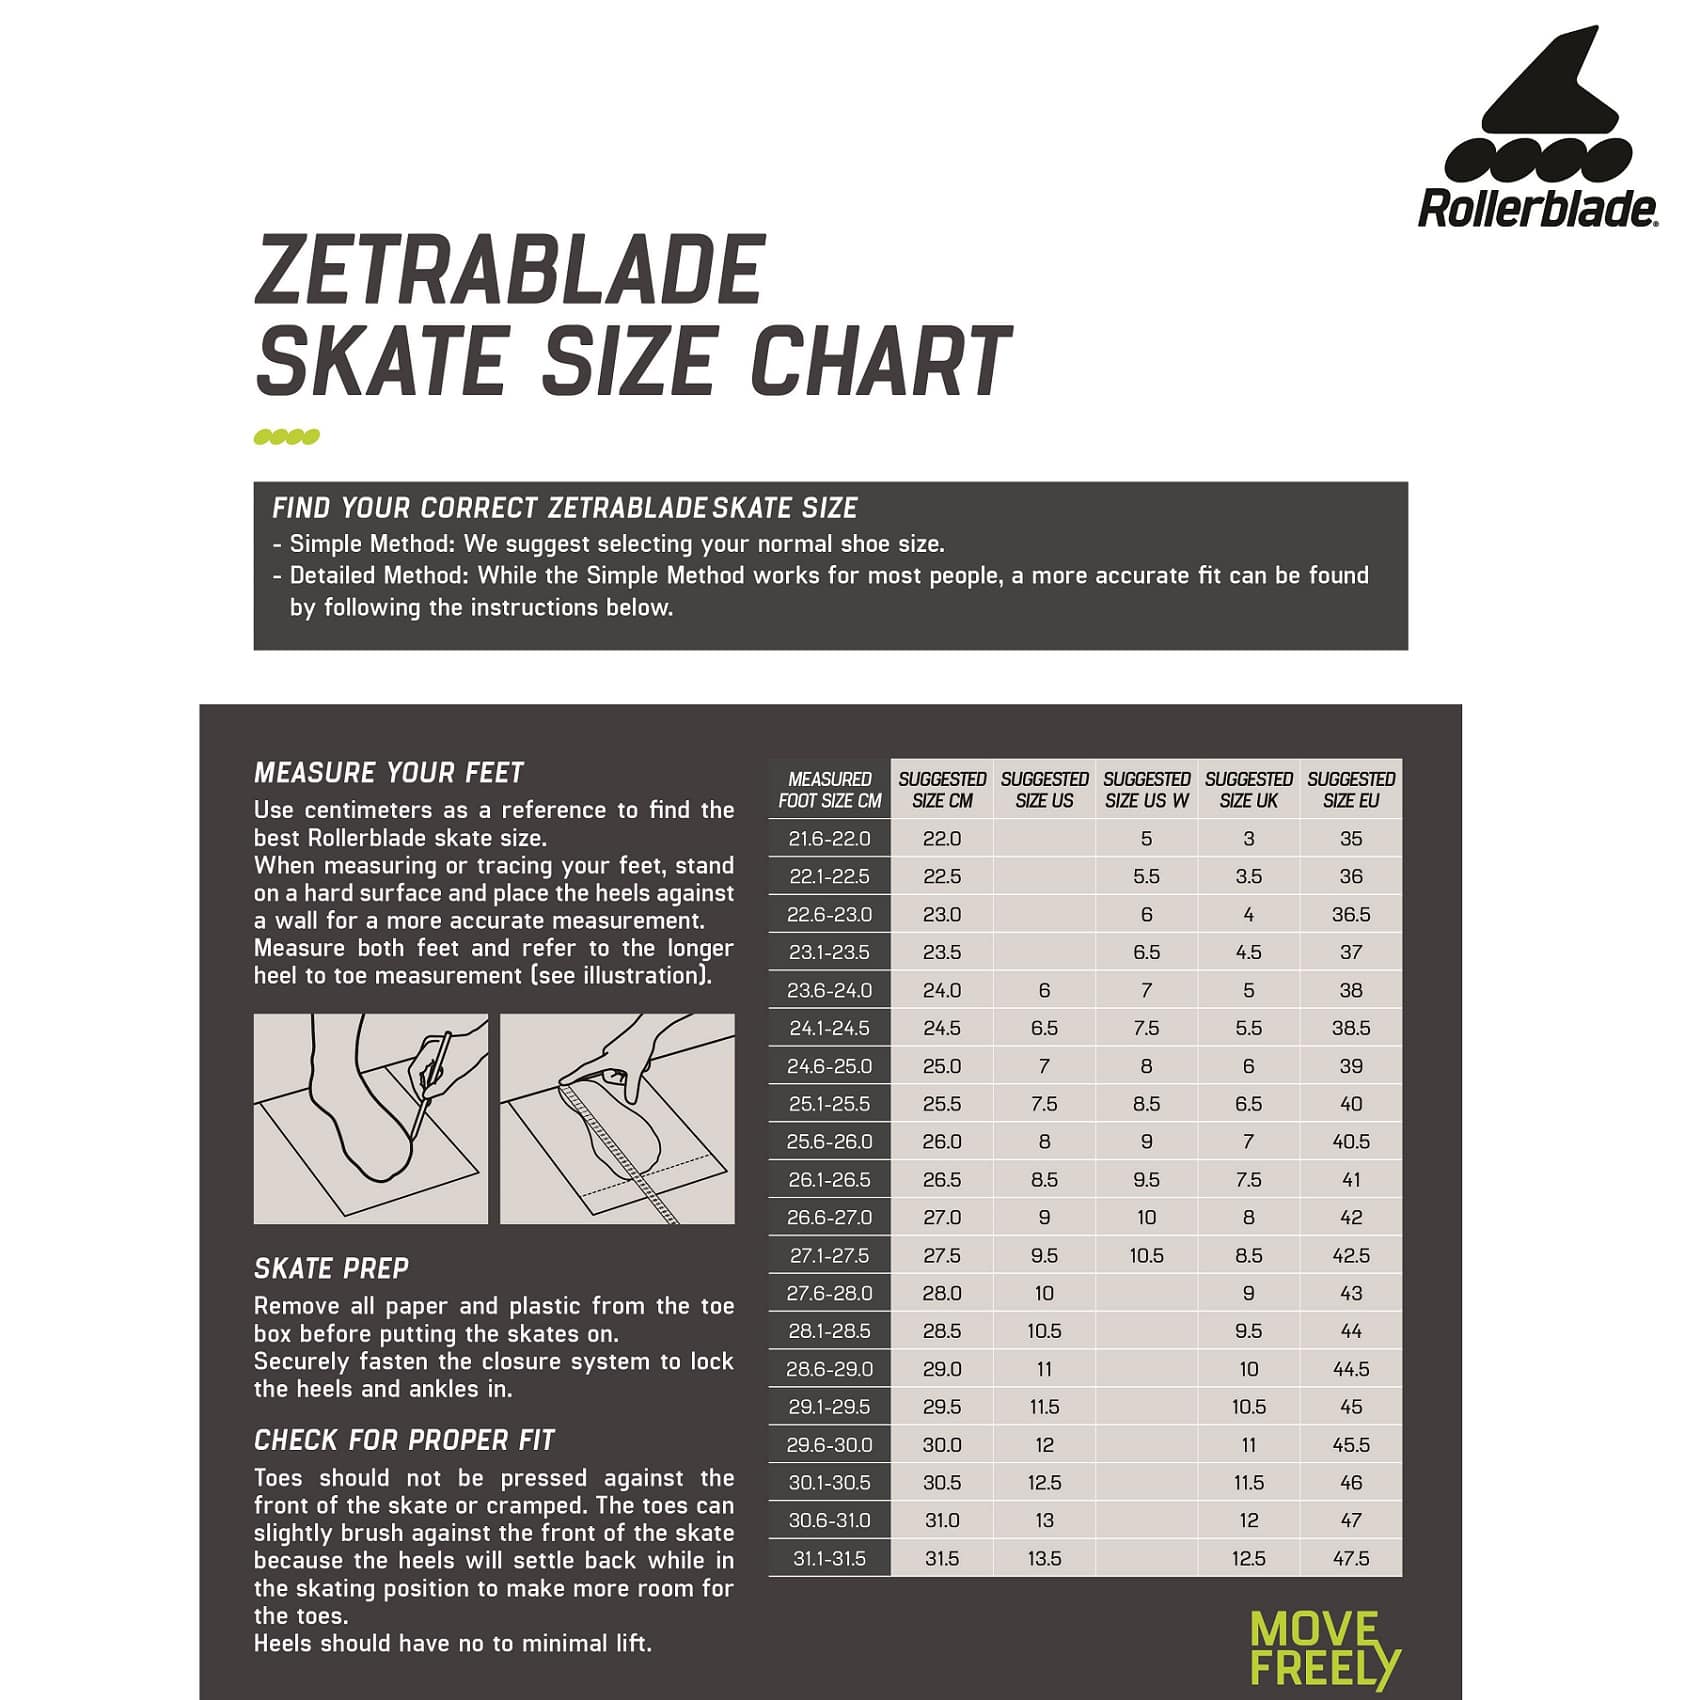 zetrablade-rollerblade-size-chart